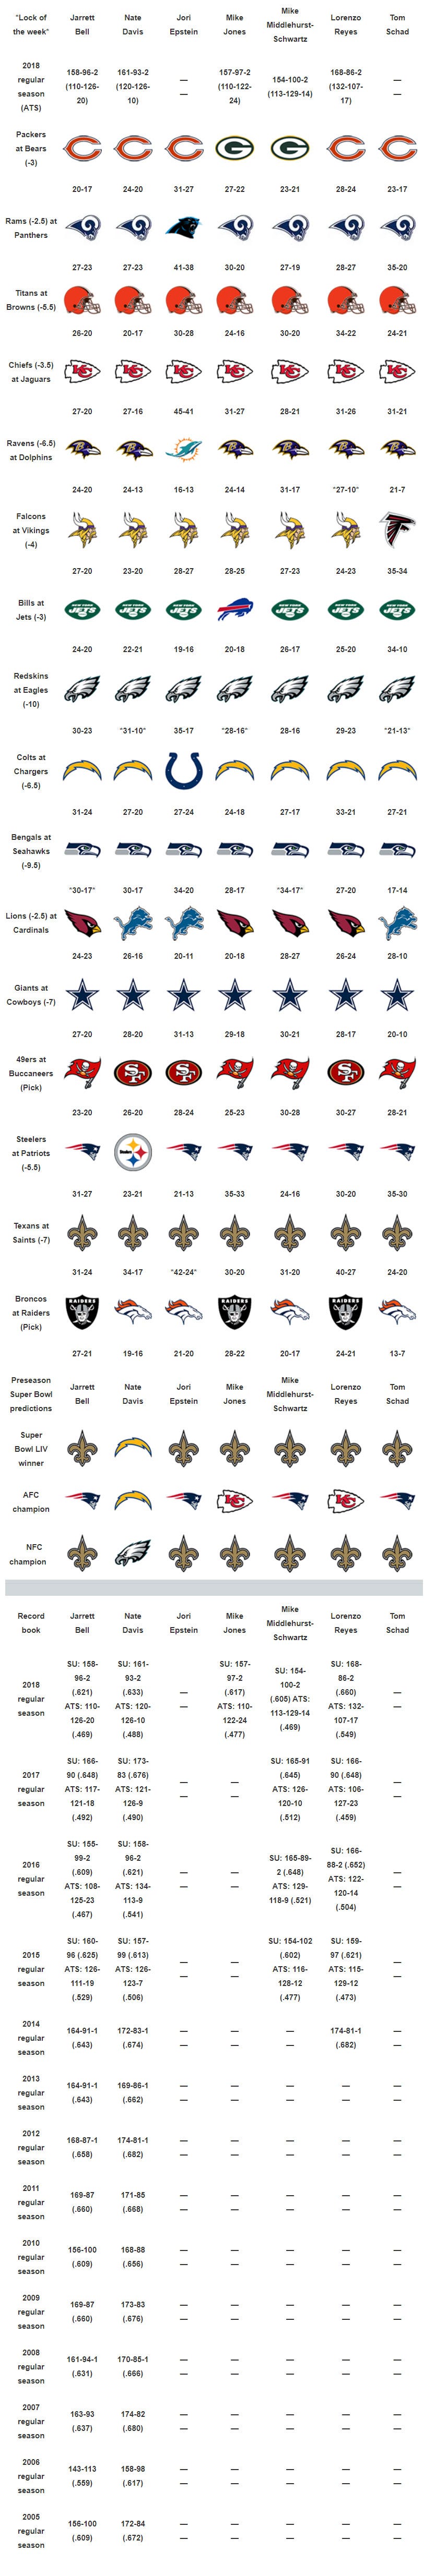 NFL Week 7 Picks and Predictions: Lock of the Week, Upset of the